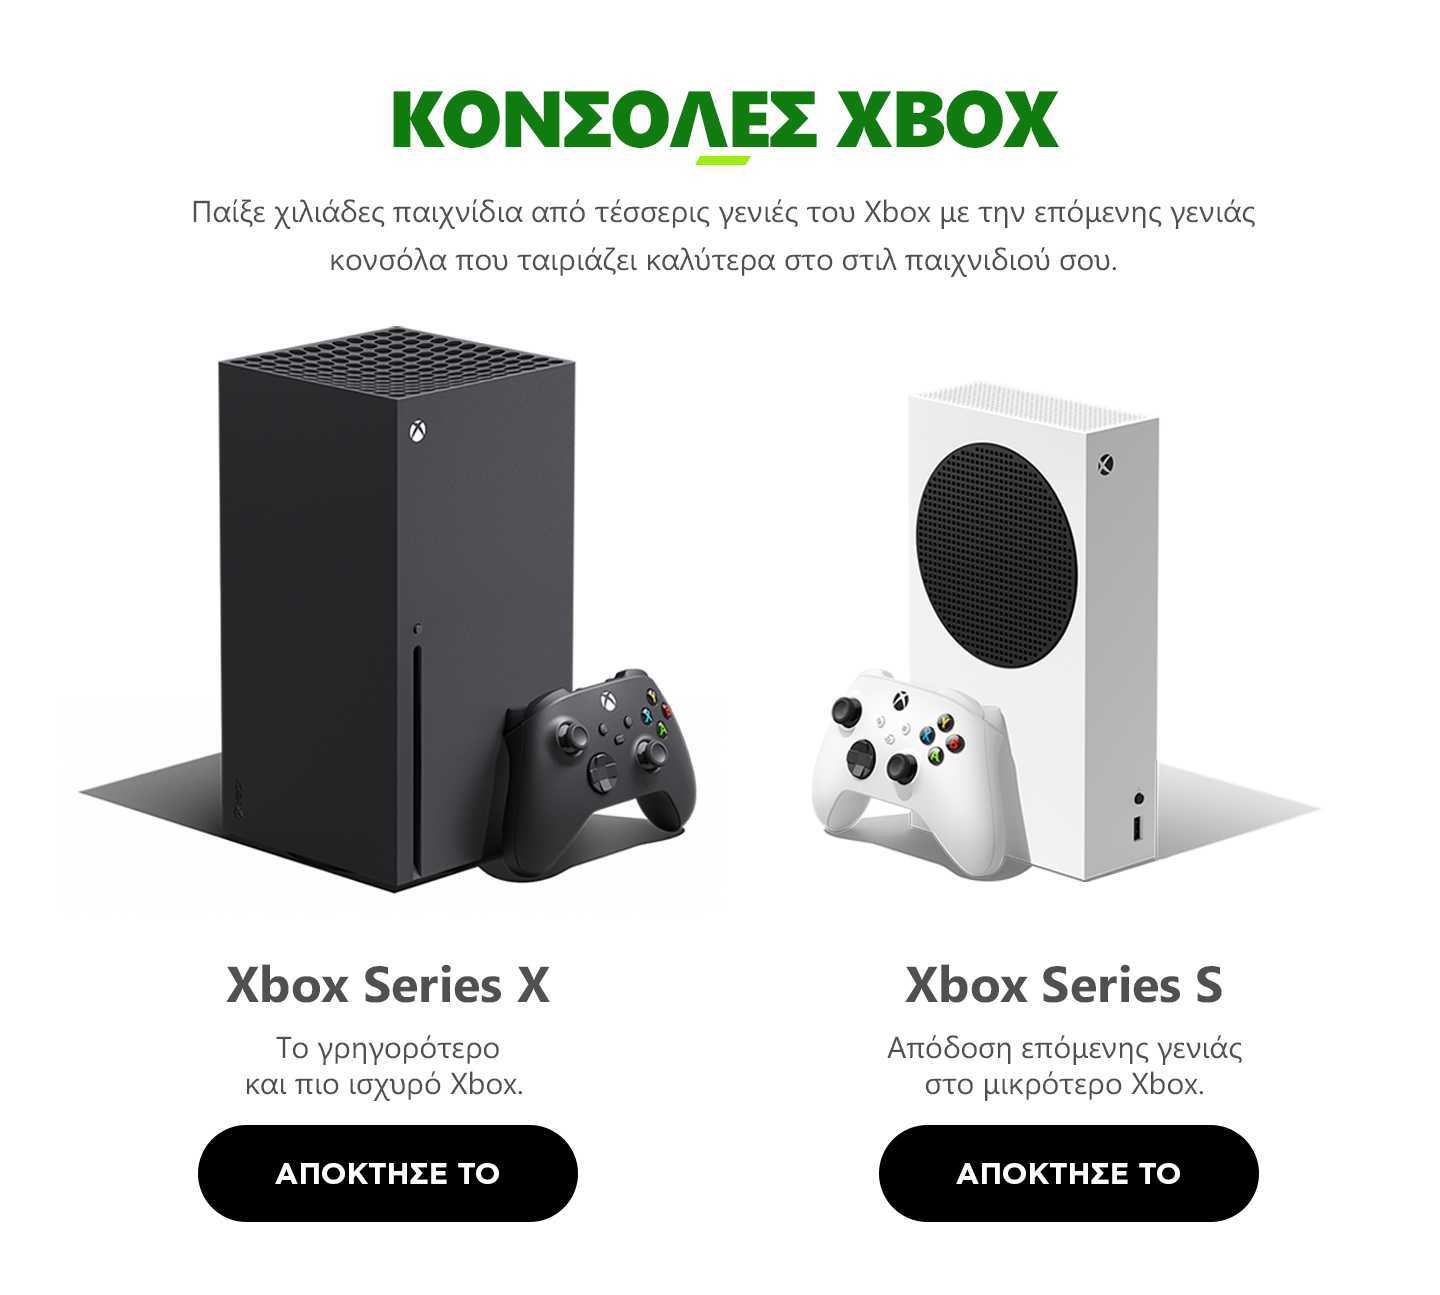 Как подключить новый xbox series s. Xbox one x габариты. Xbox Series x габариты коробки. Xbox 360 Series x. Xbox Series s габариты.